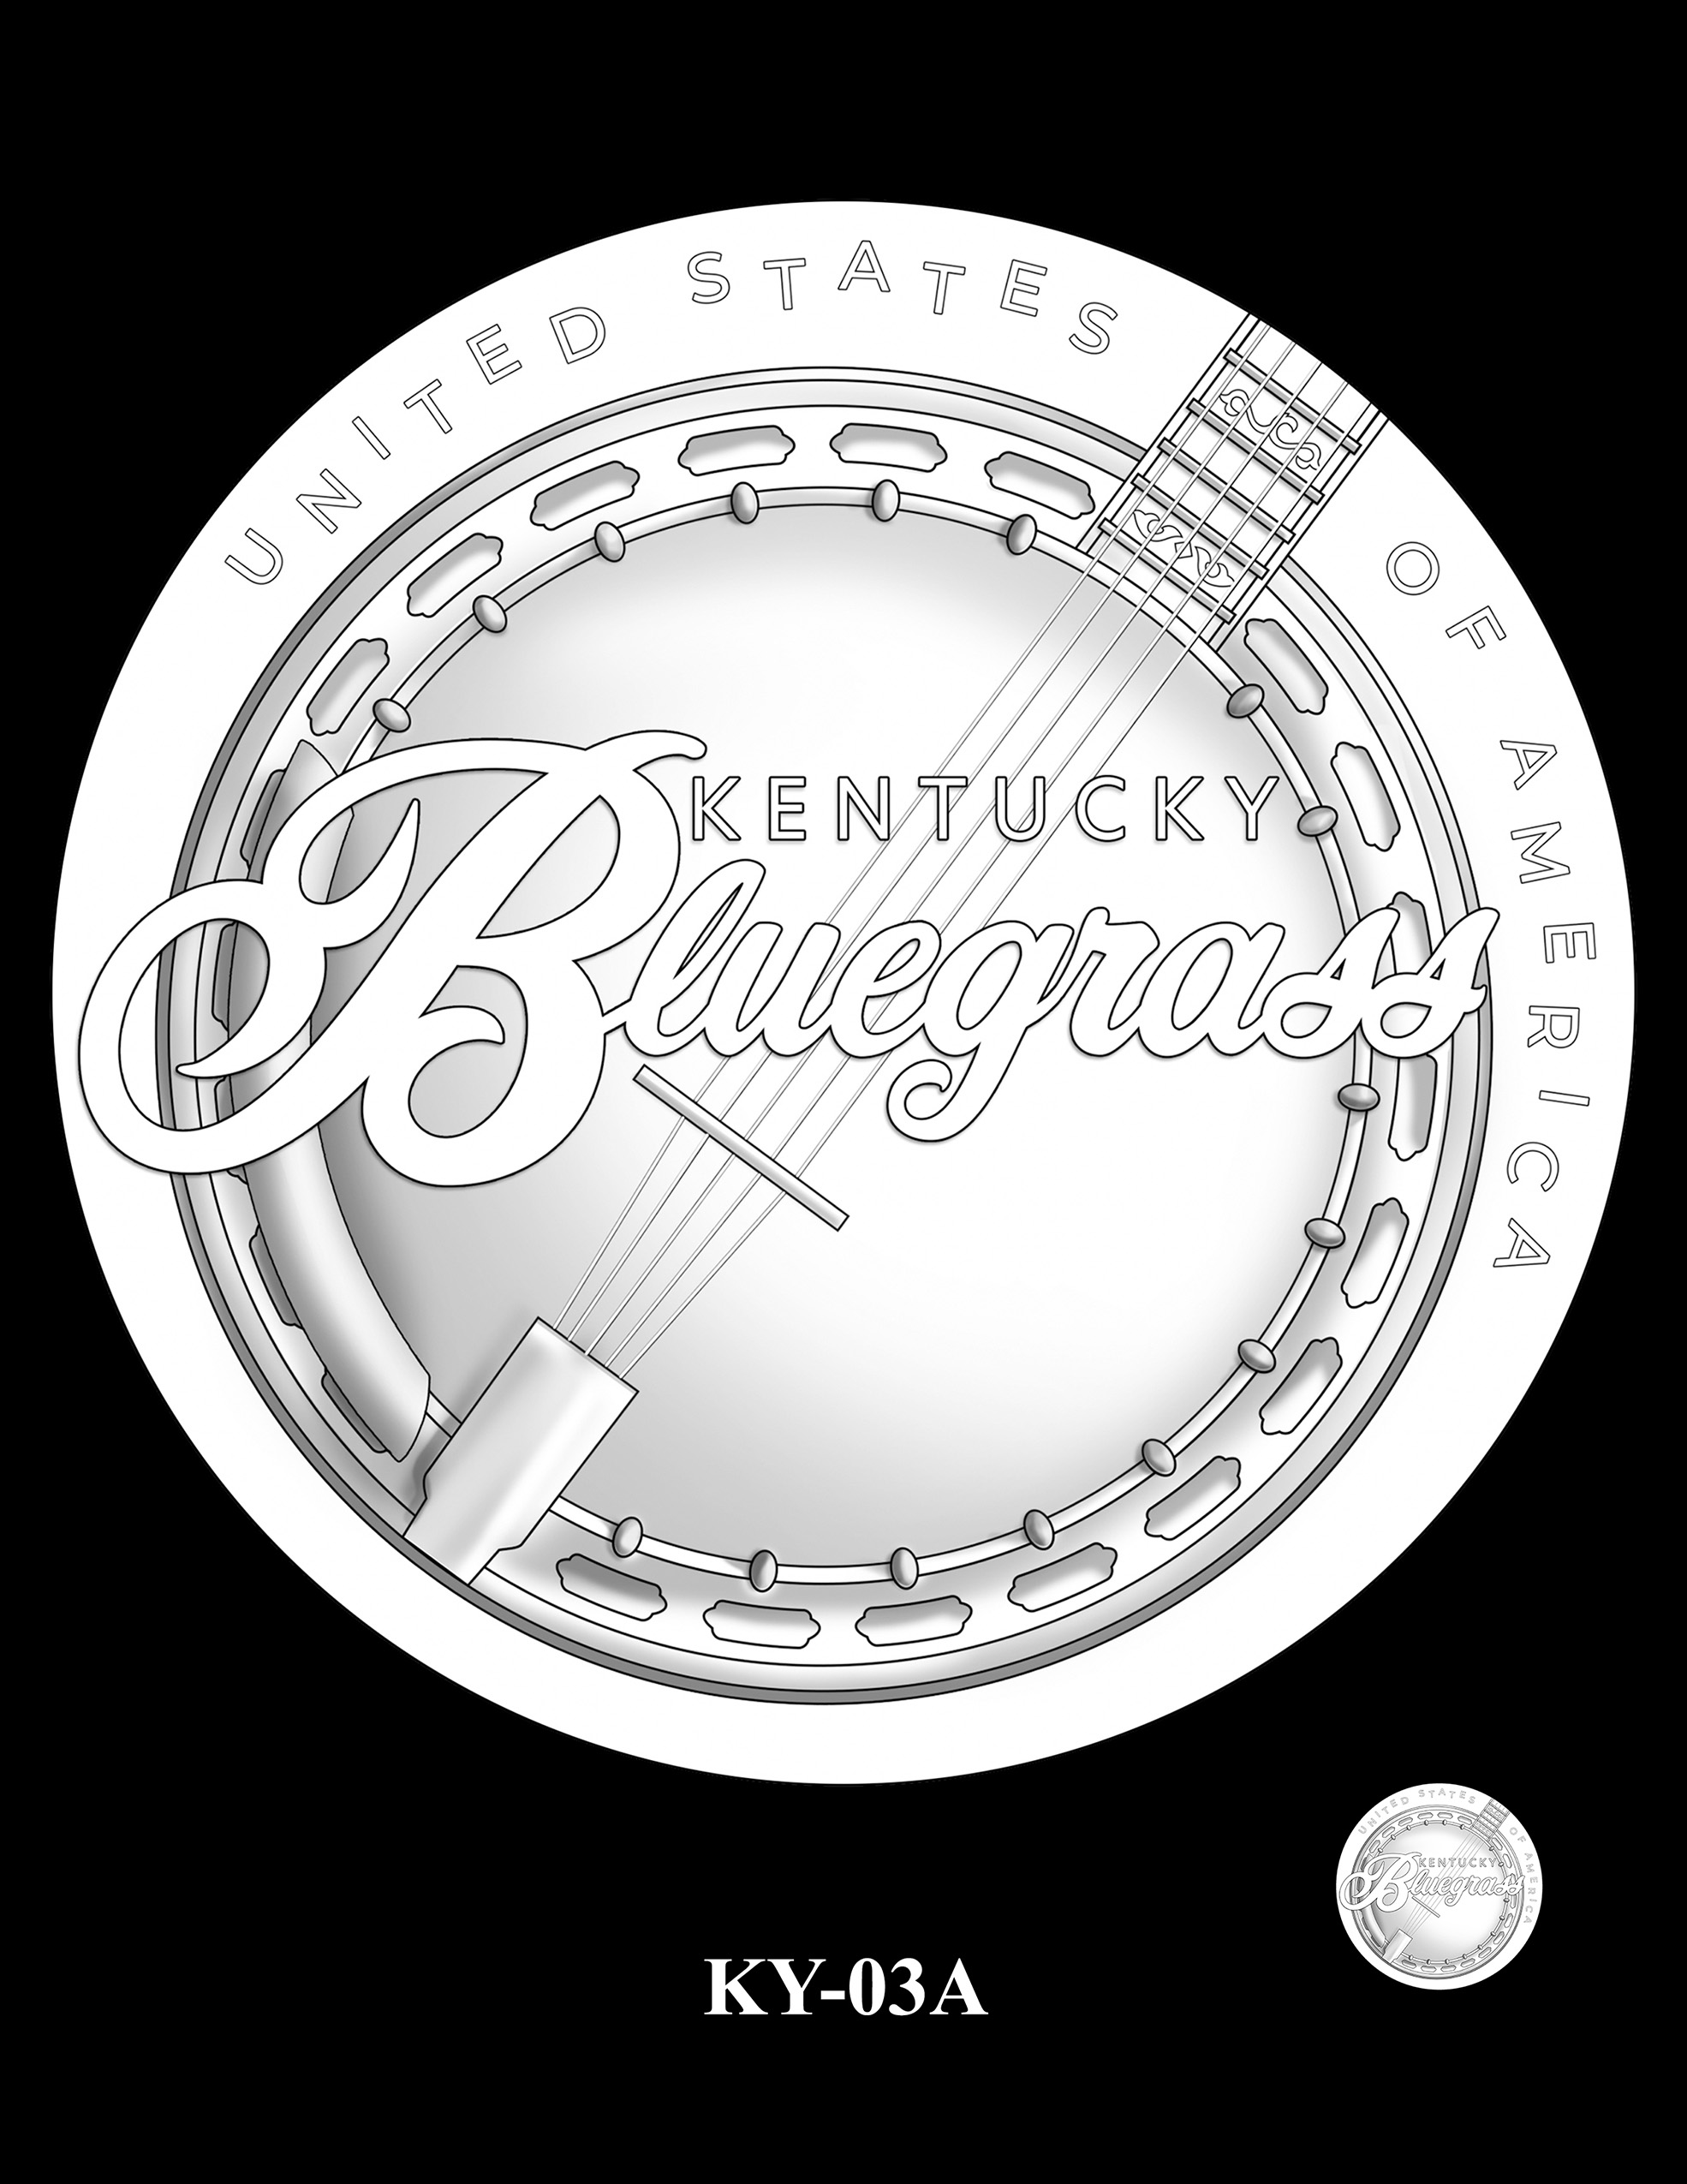 KY-03A -- 2022 American Innovation $1 Coin - Kentucky